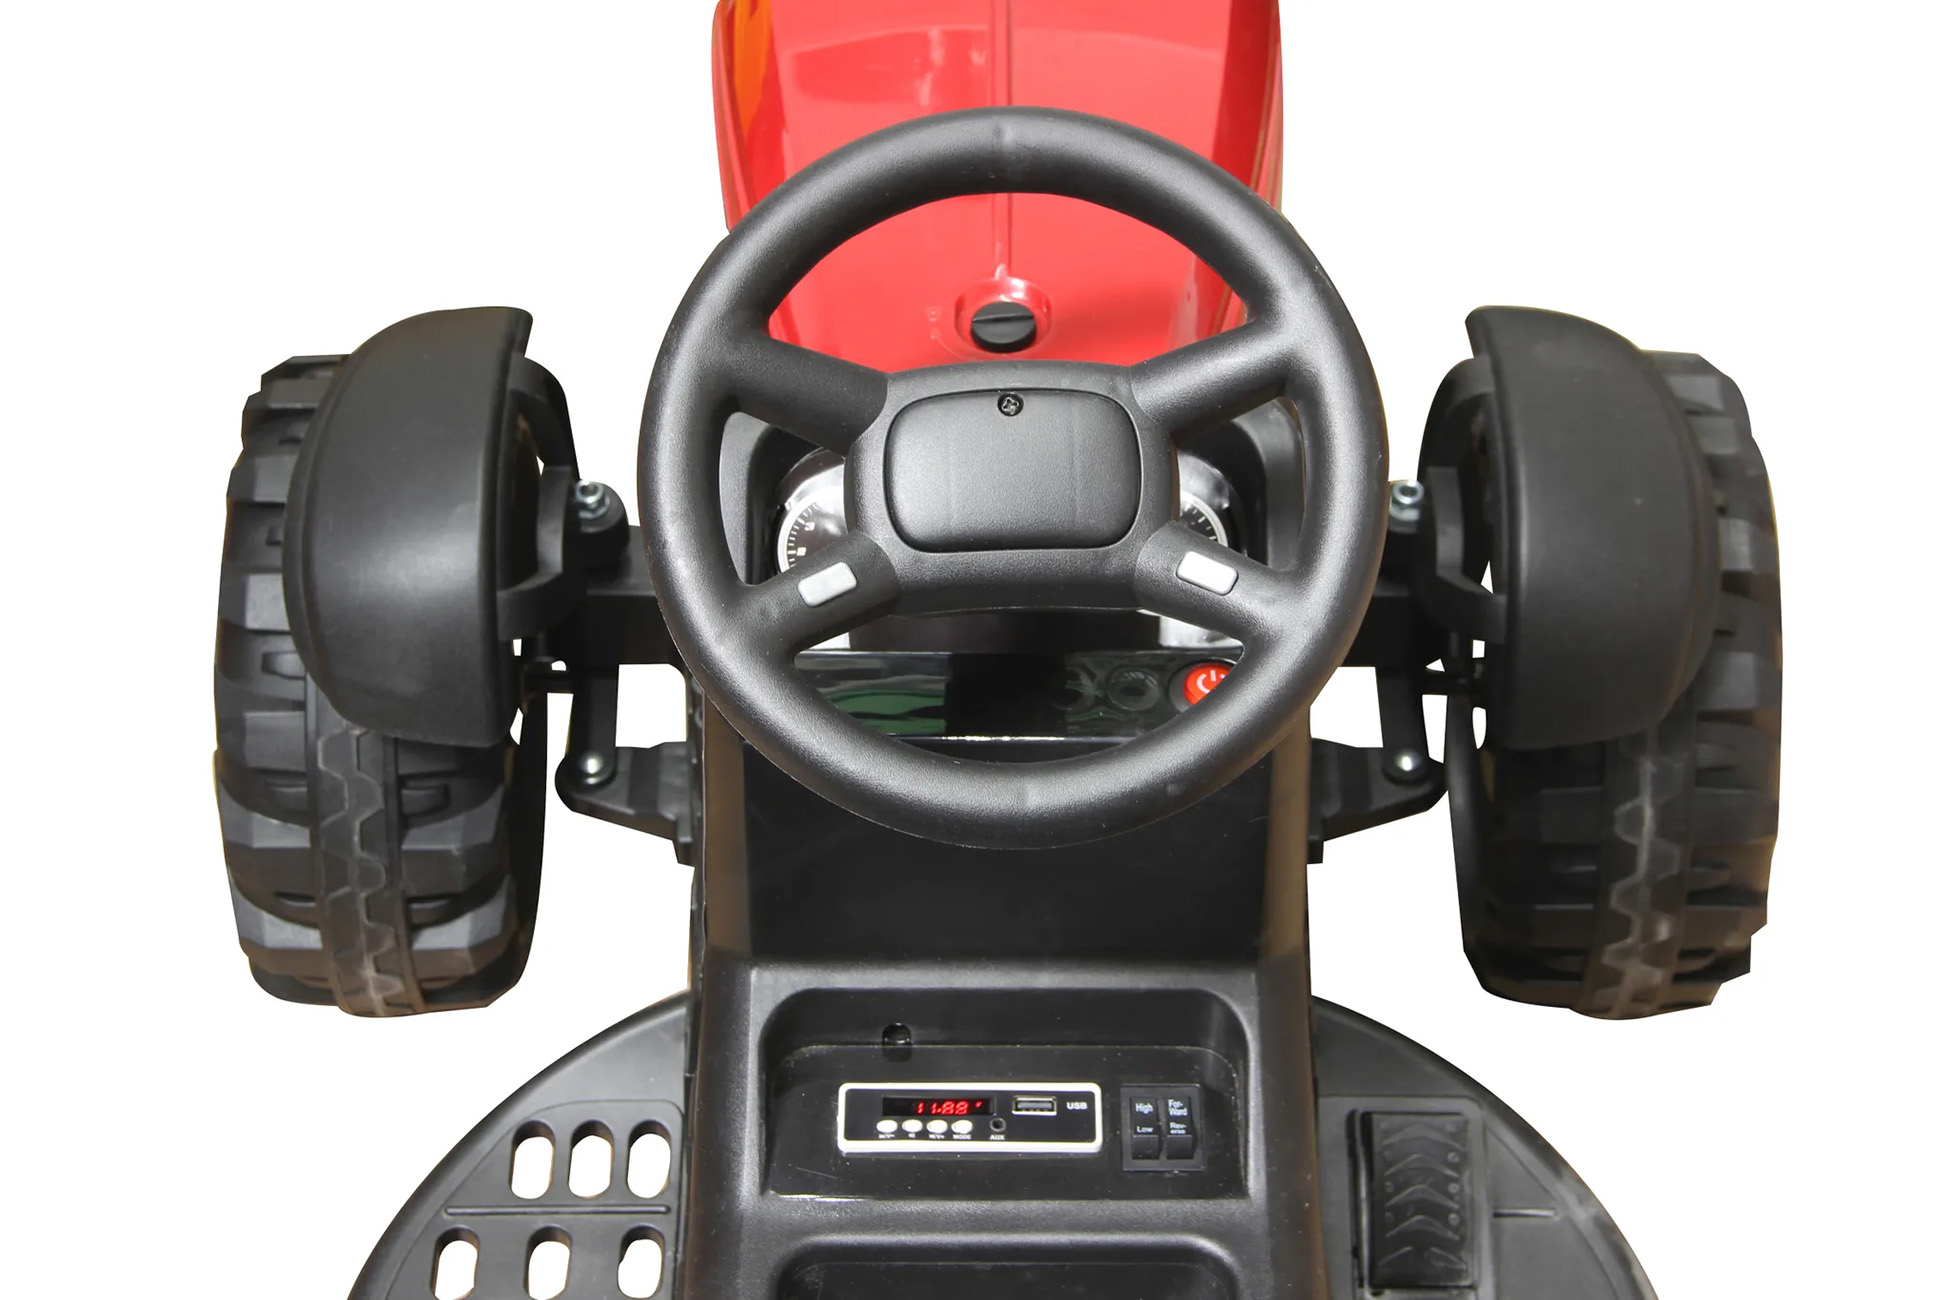 JAMARA Ride-on Traktor Super Load 12V Kinder-Elektroauto